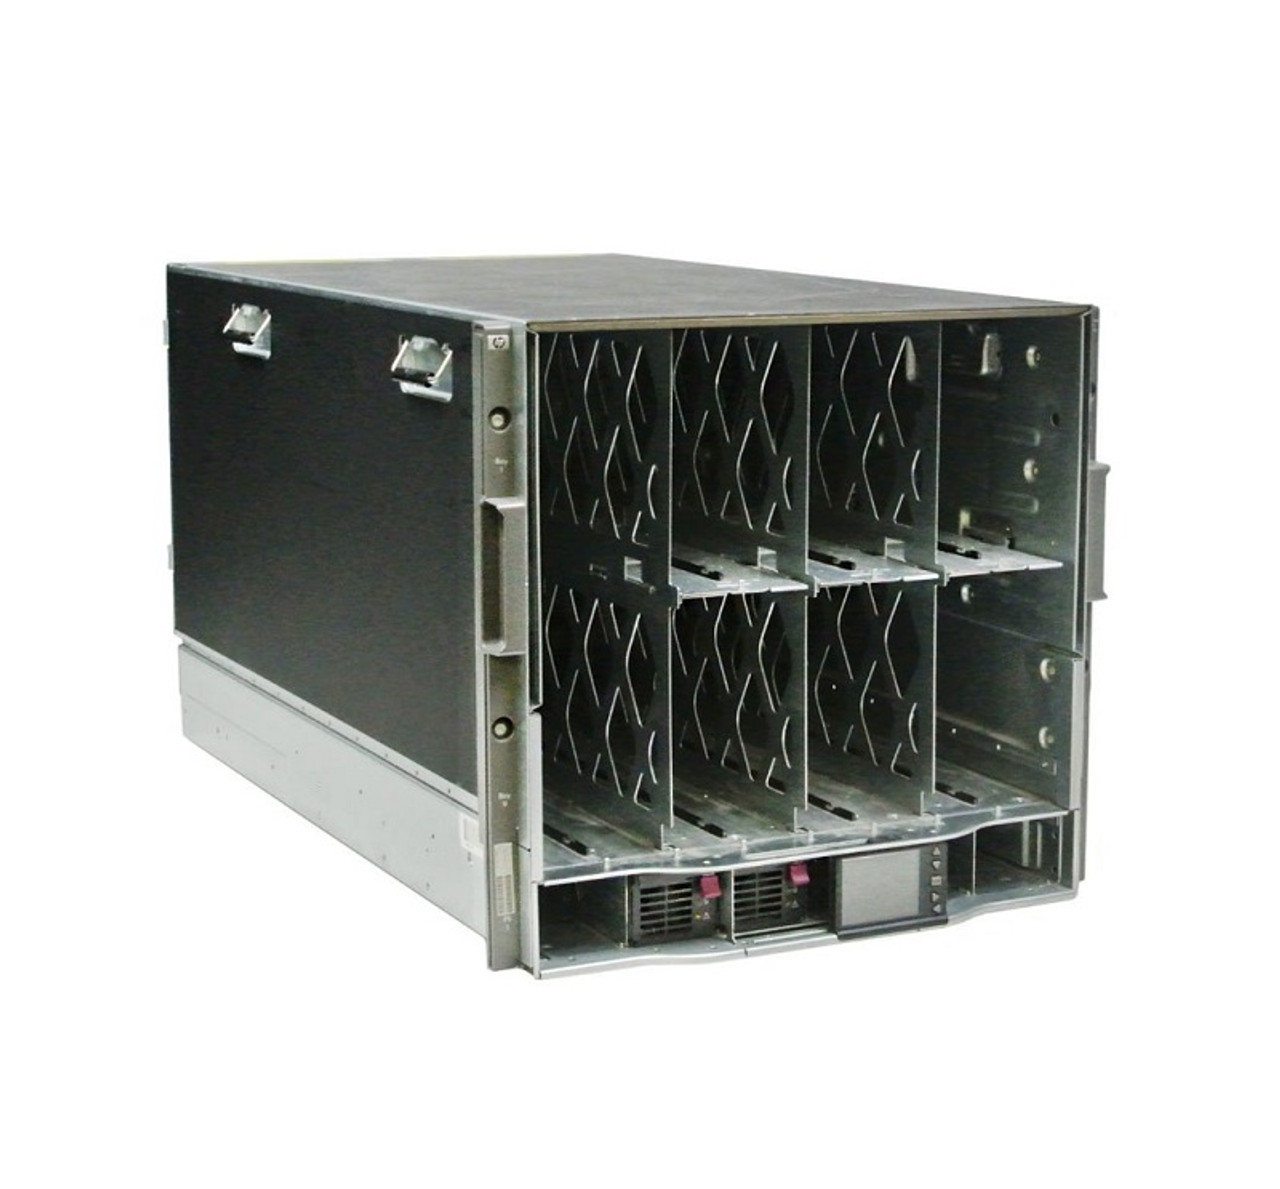 AD542A - HP 14 Bays Rack Mountable Fibre Channel Drive Enclosure - Storage Works Enclosure M5314 for All Eva